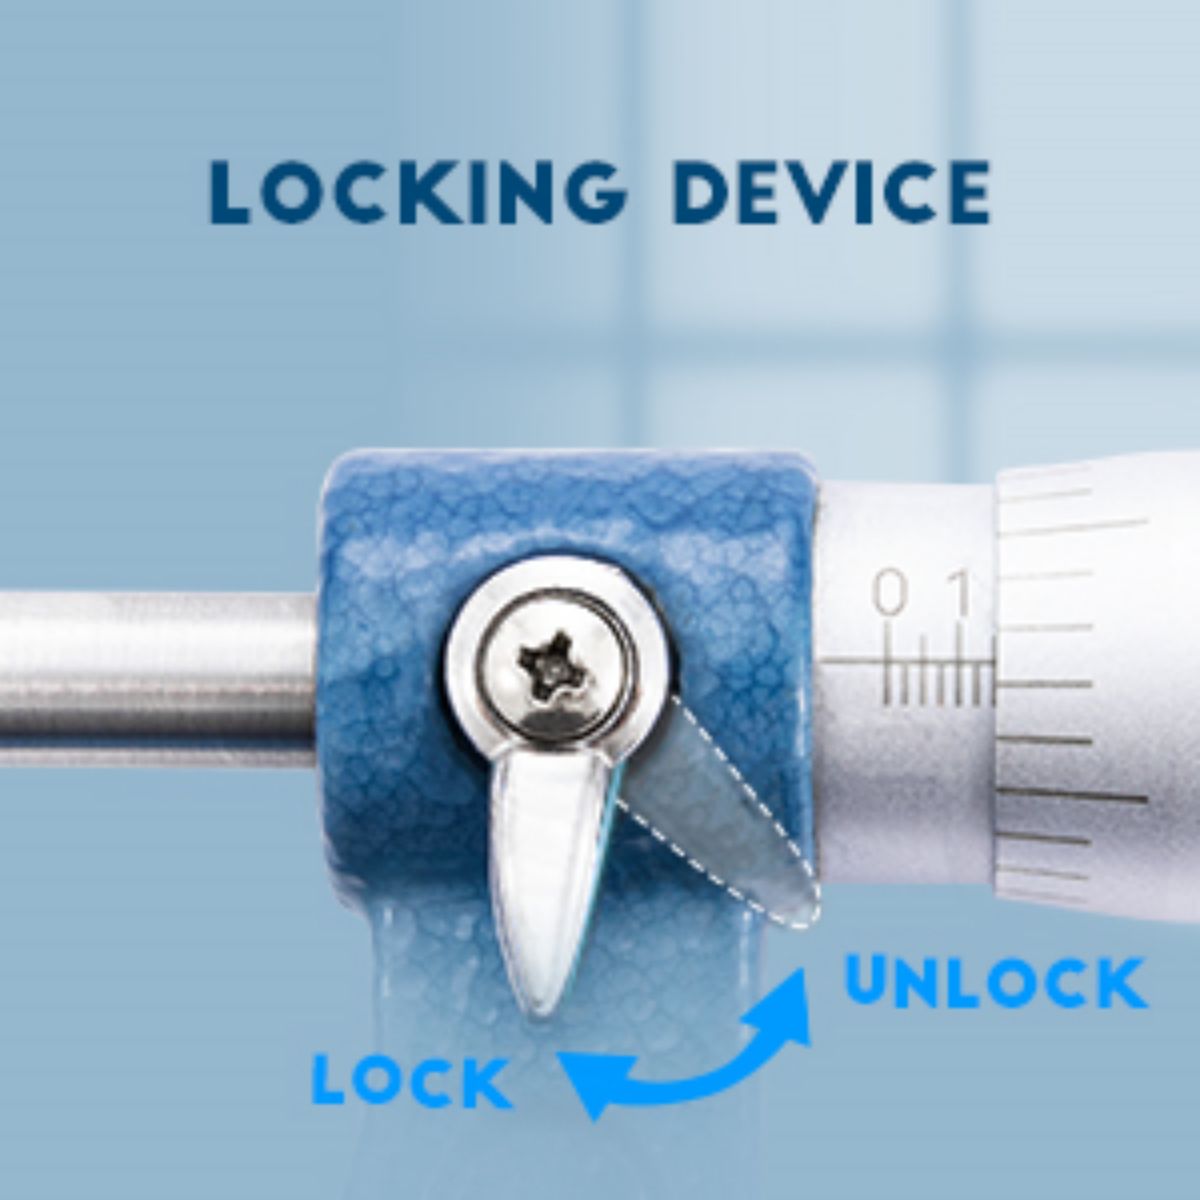 Locking screw